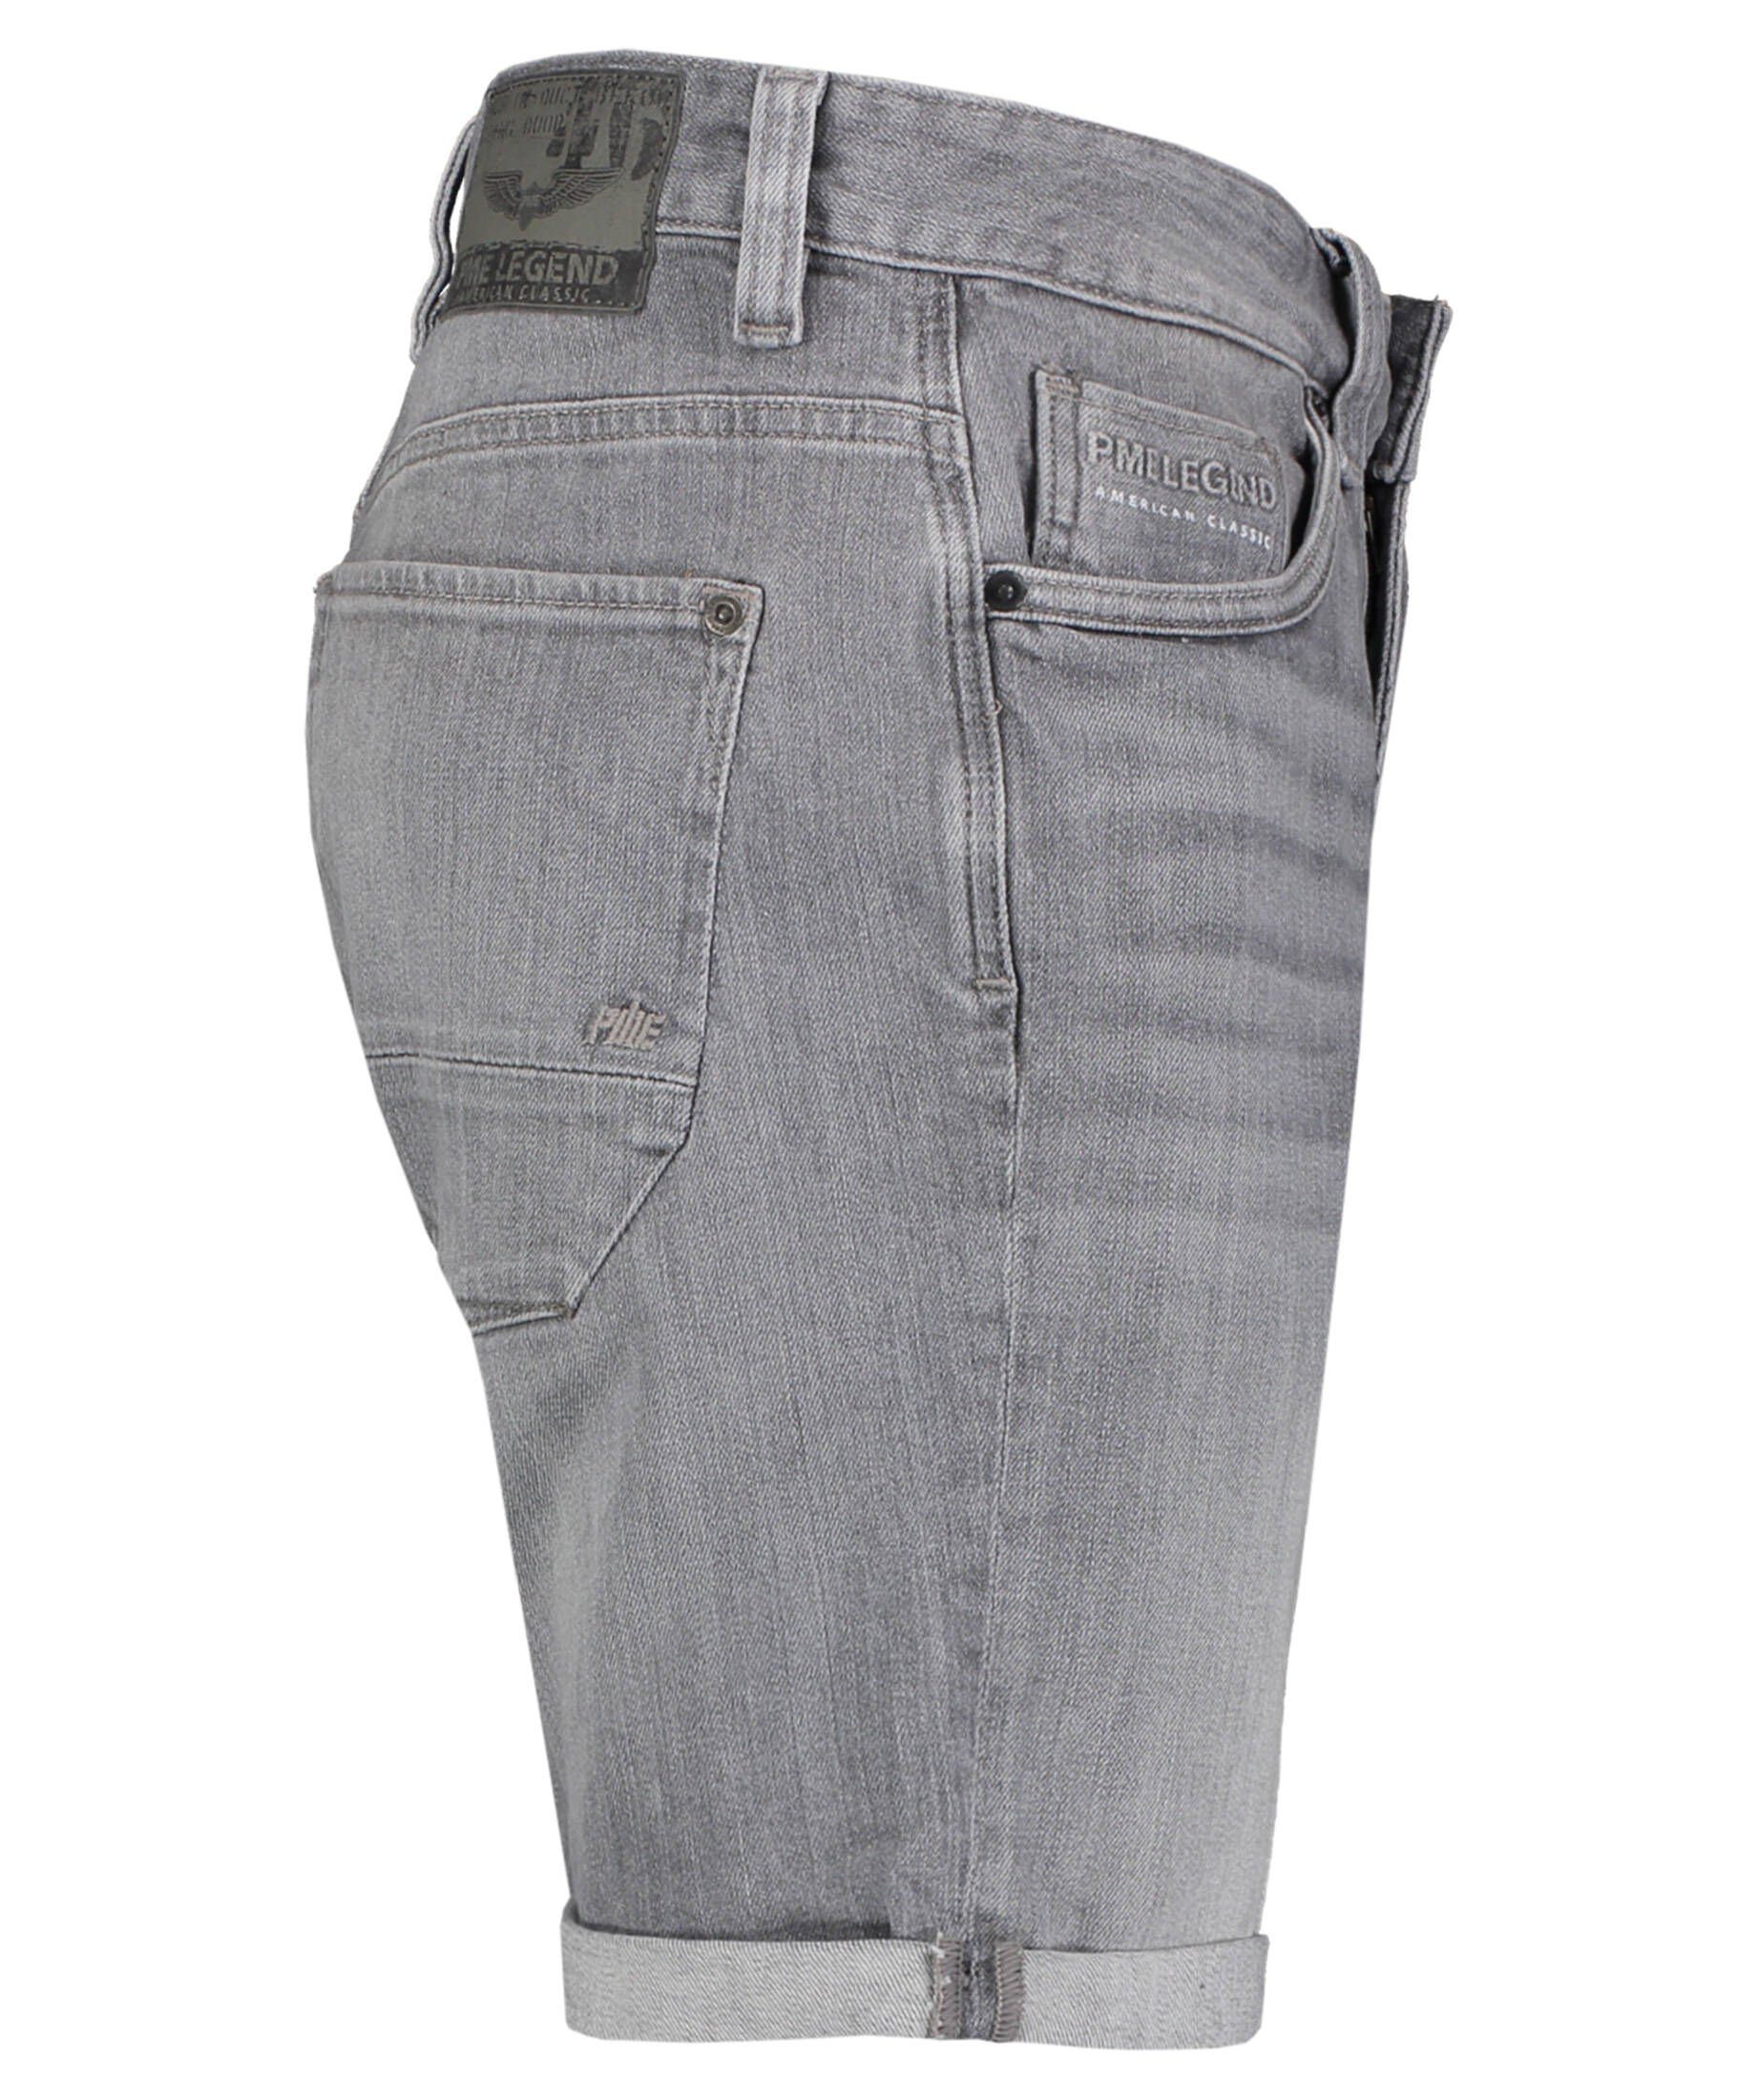 Fit Regular Herren silber Jeanshorts (12) PME NIGHTFLIGHT Jeansshorts LEGEND